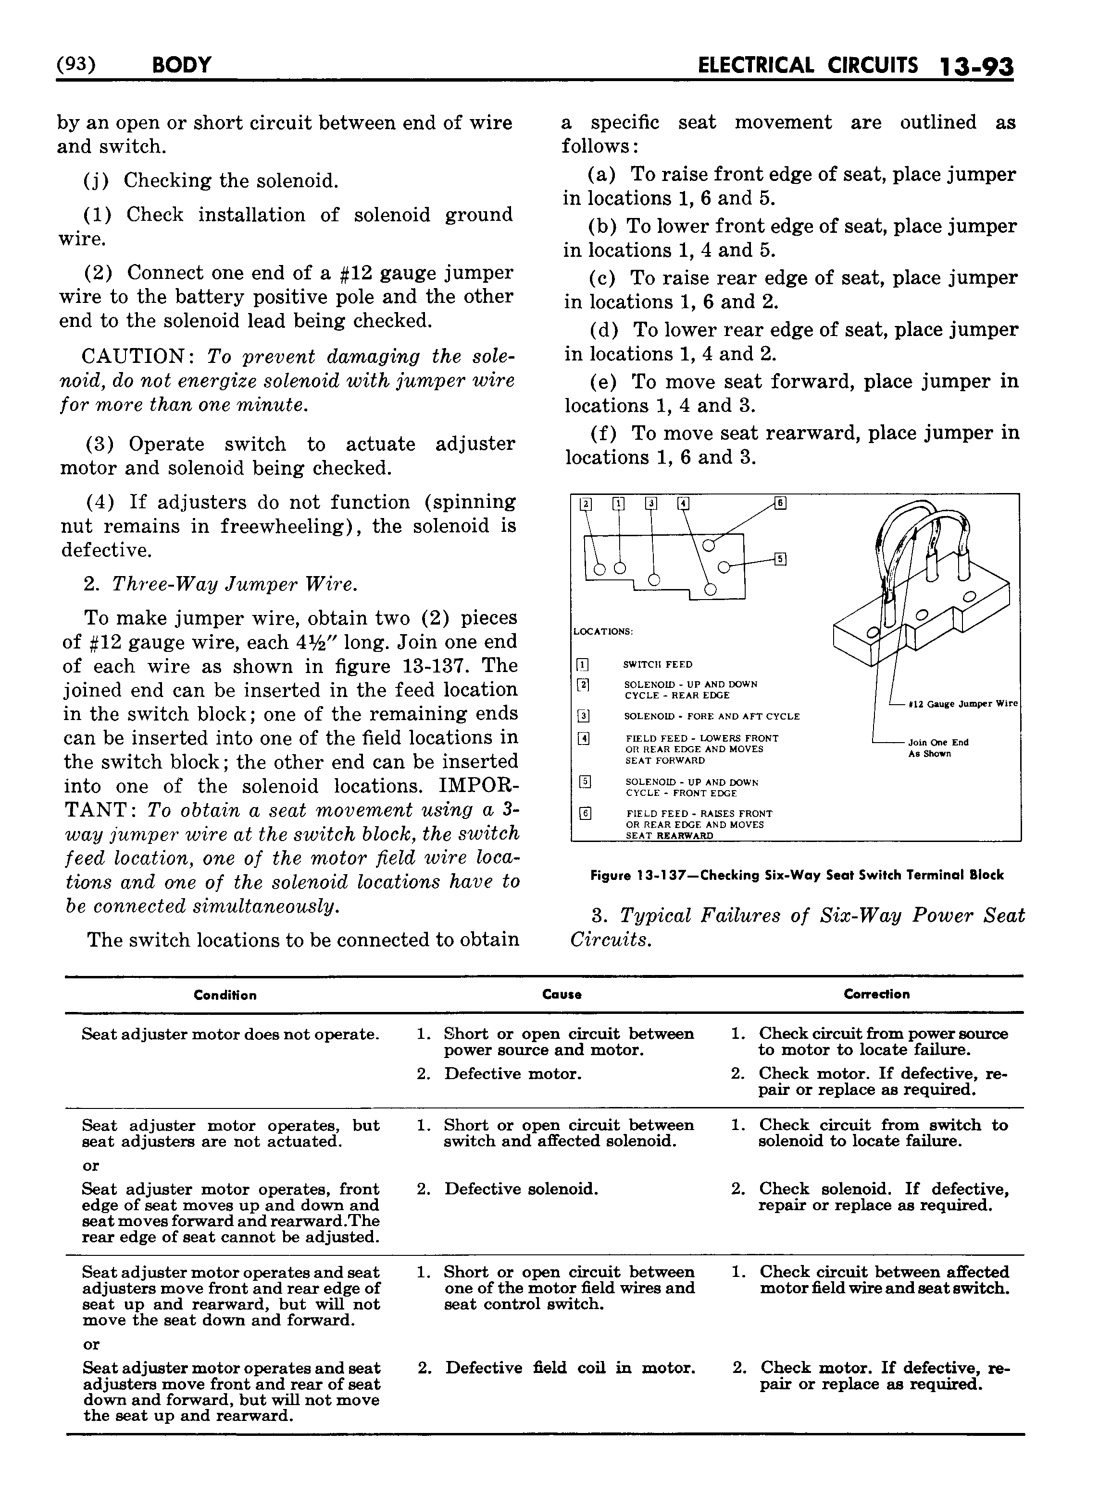 n_1957 Buick Body Service Manual-095-095.jpg